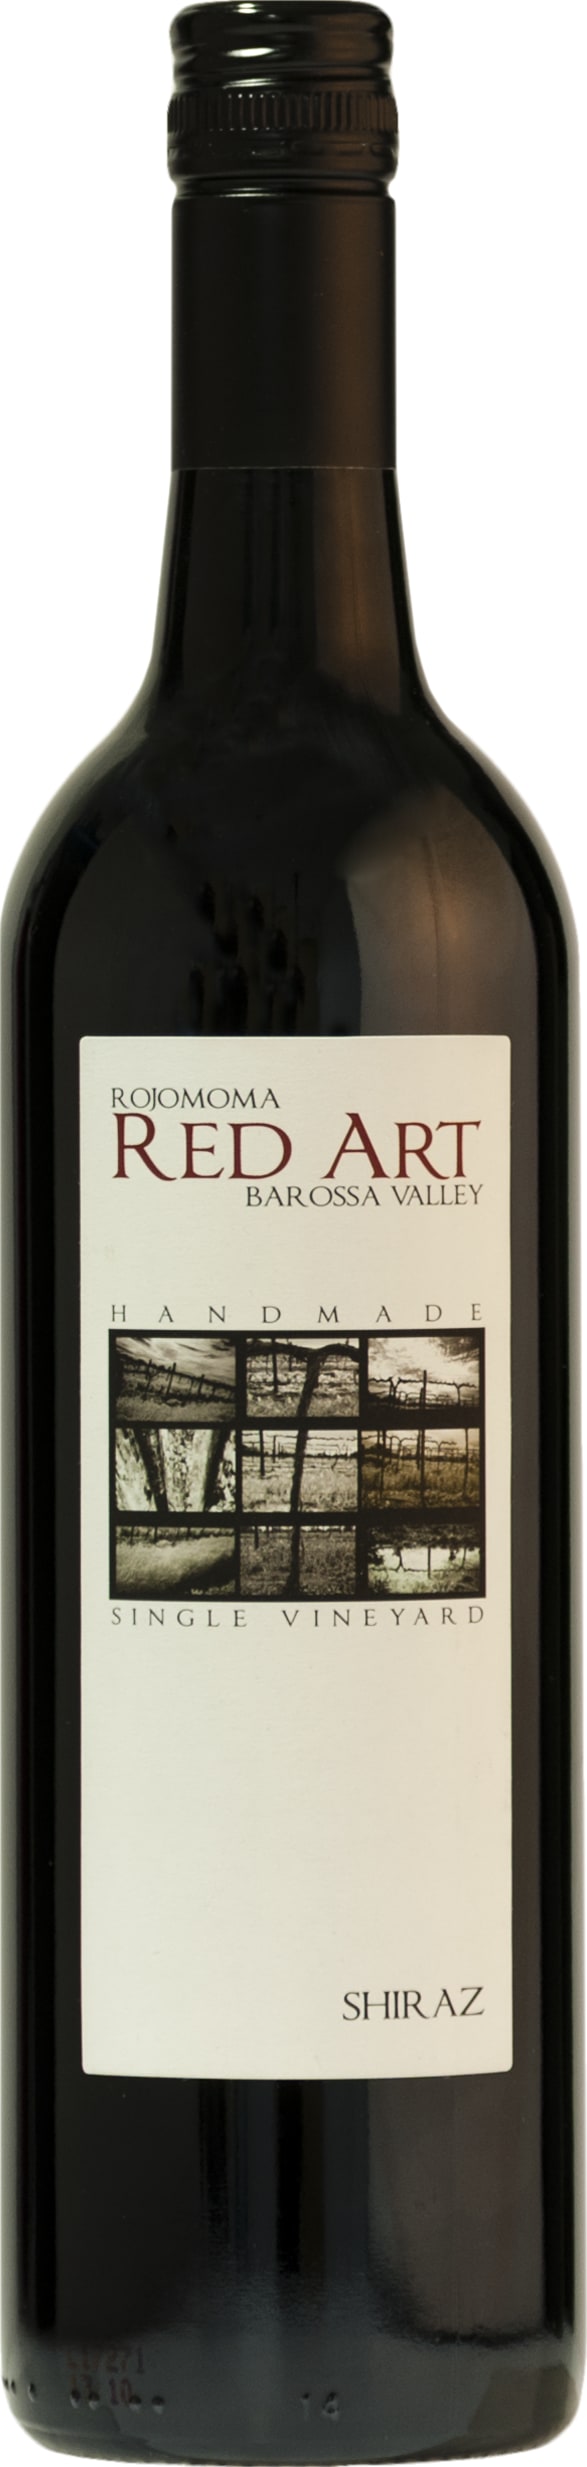 Rojomoma Red Art Shiraz 2016 6x75cl - Just Wines 